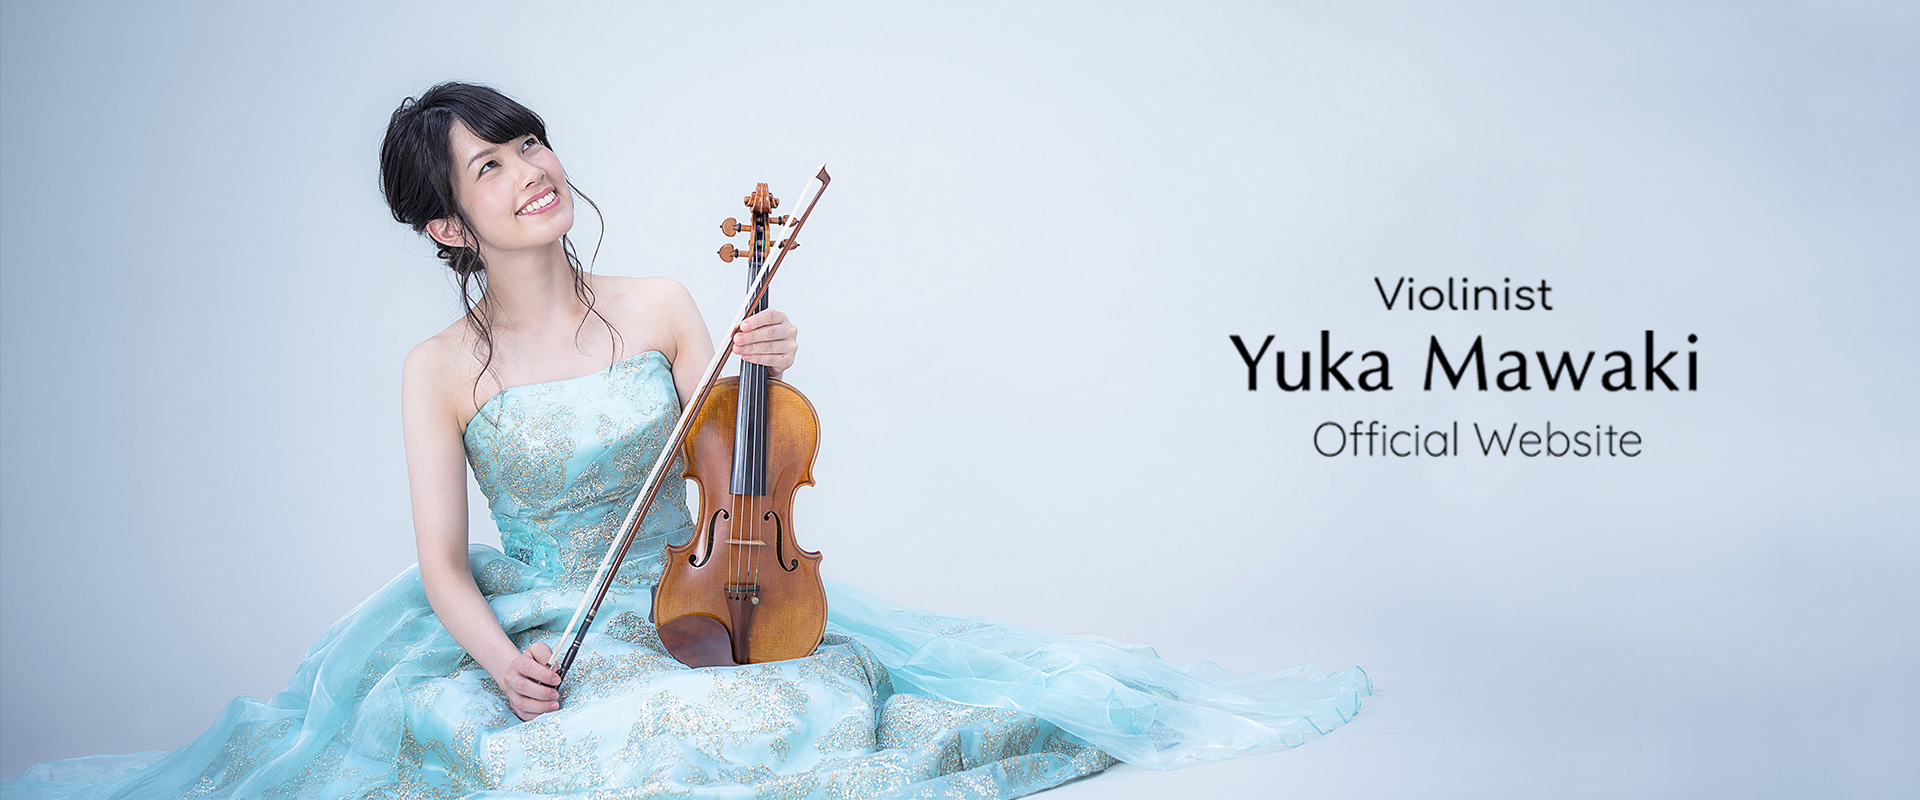 YUKA MAWAKIヴァイオリニスト間脇佑華　official website